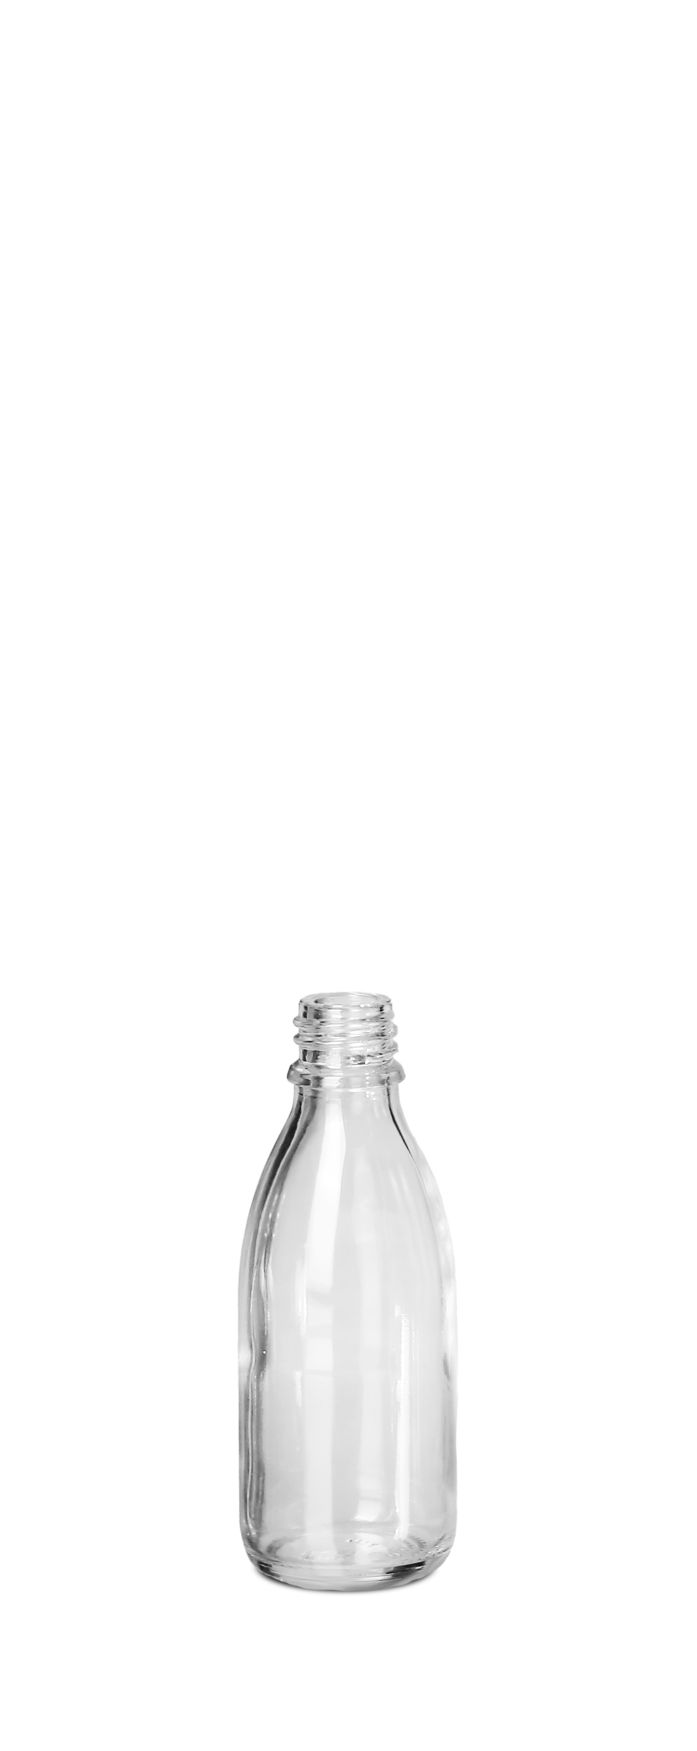 50 ml bottle series standard packaging bottle